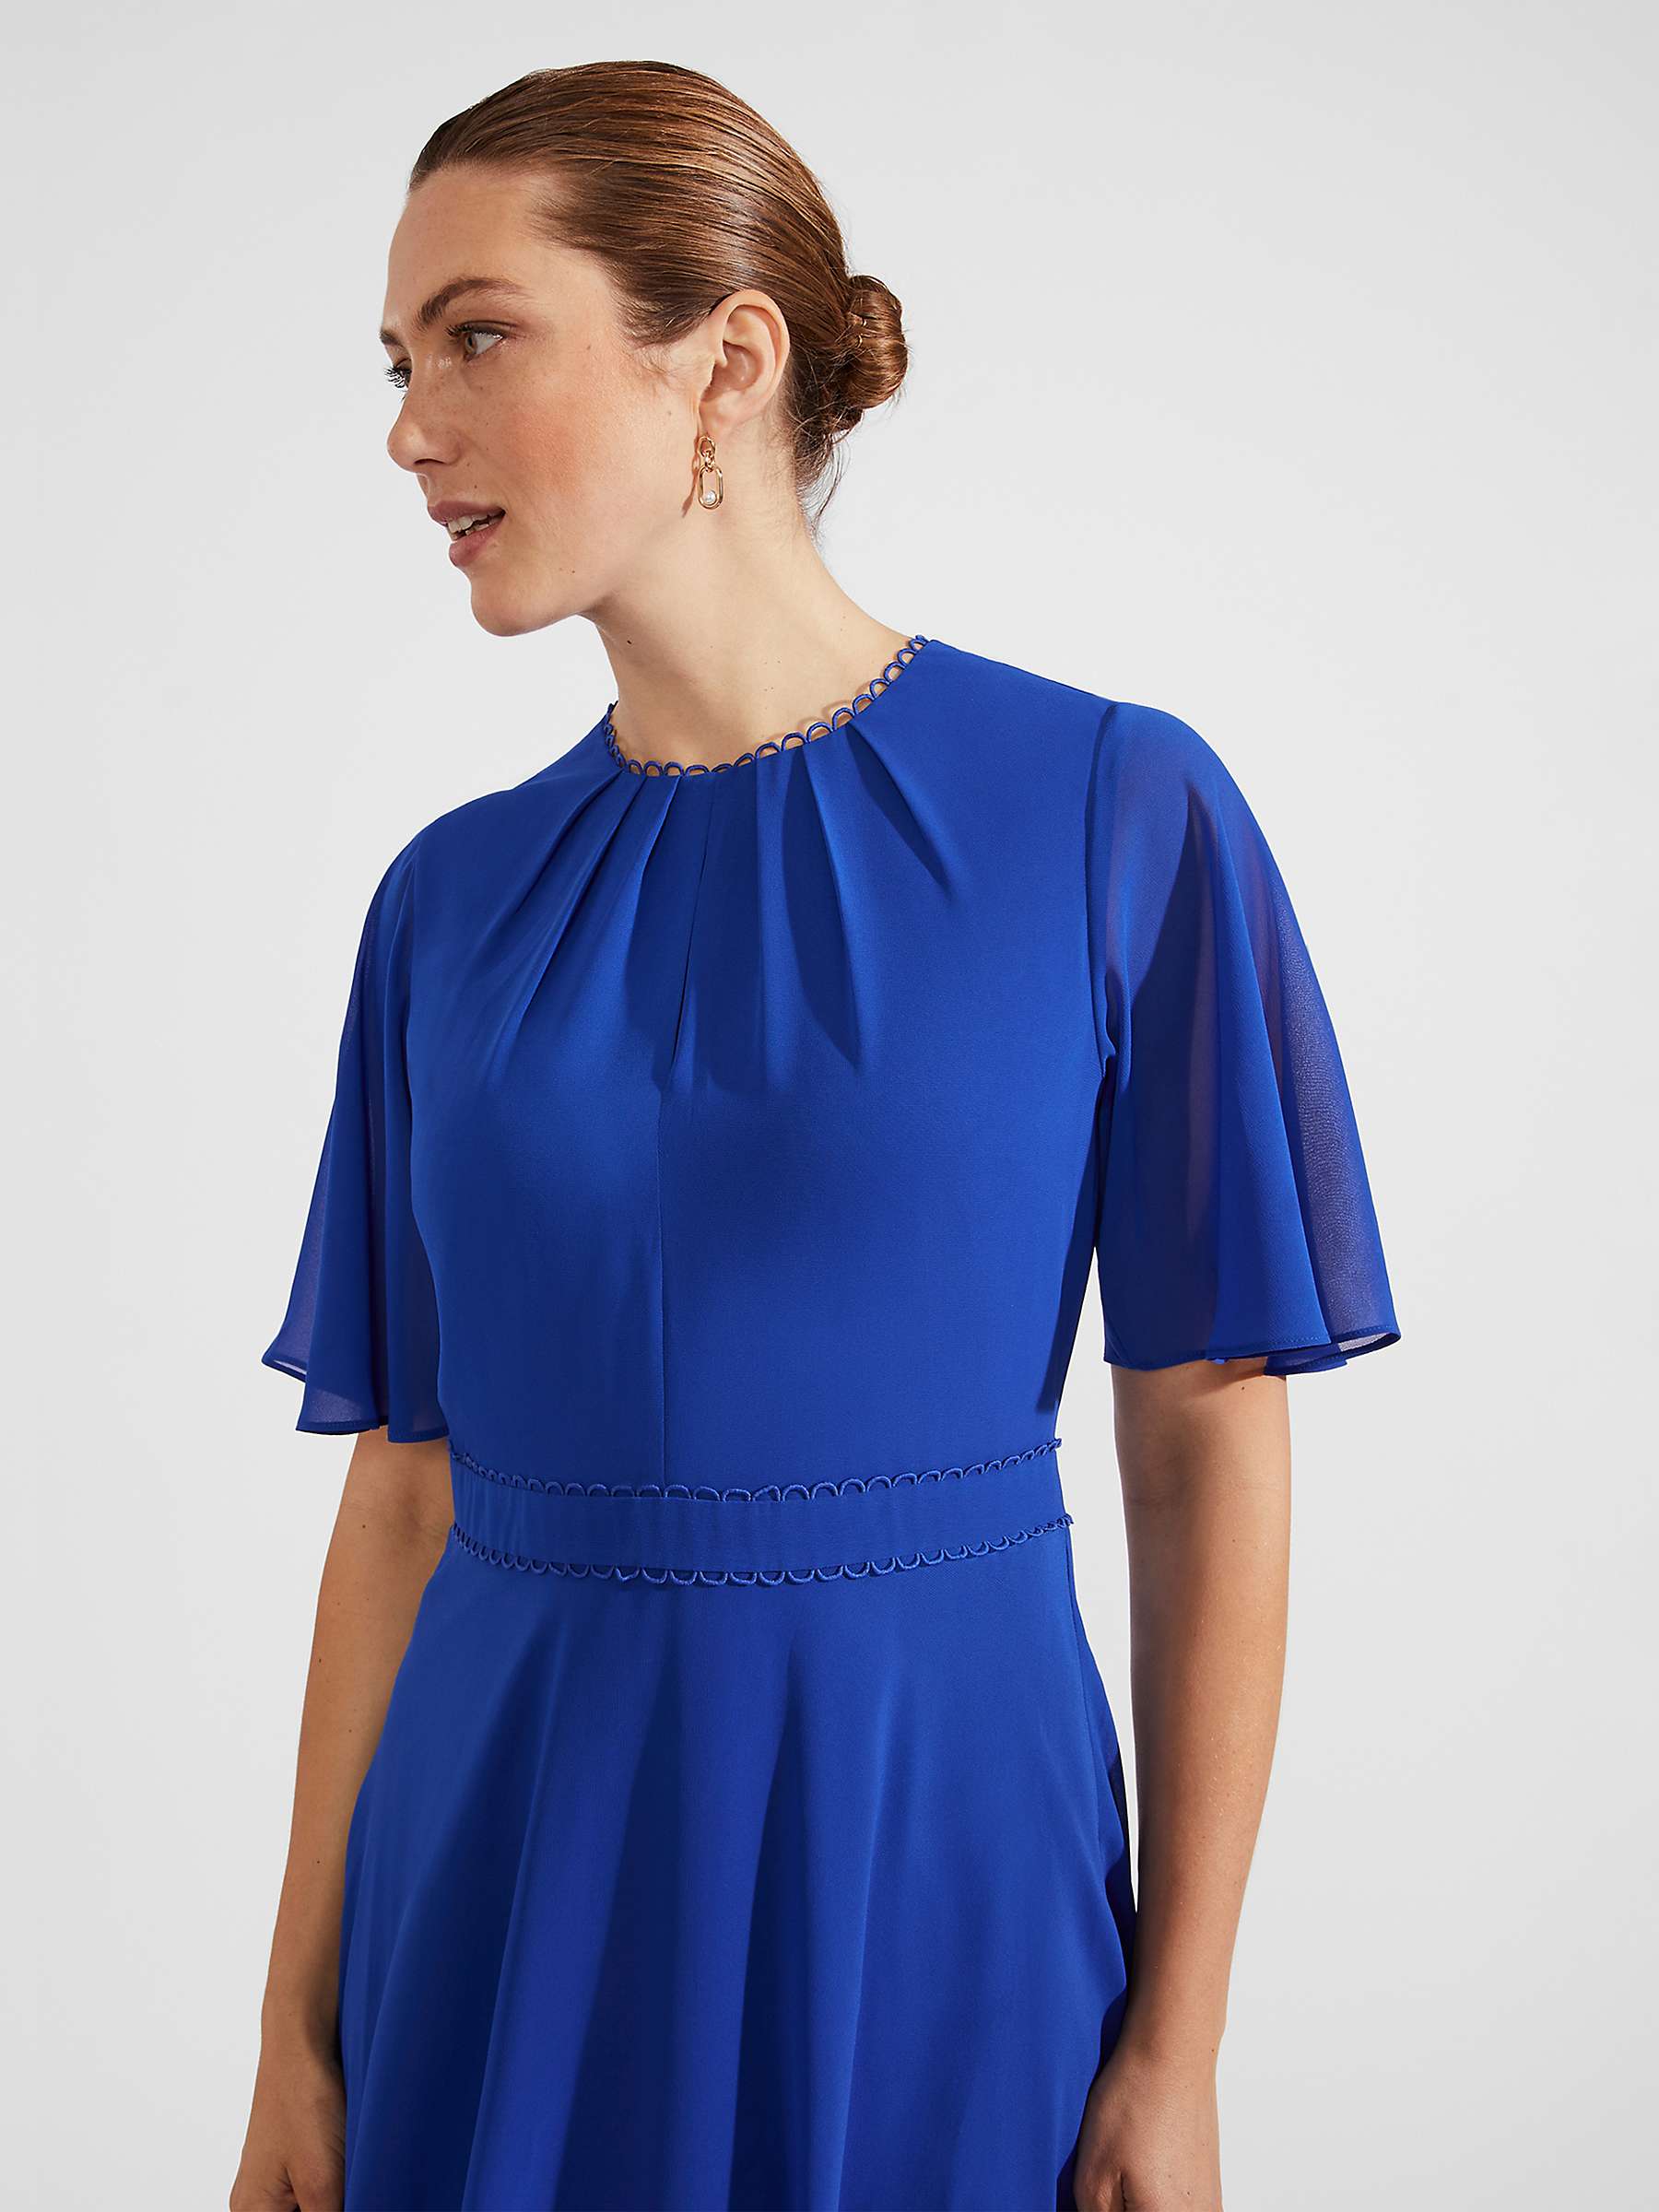 Hobbs Samara Midi Dress, Lapis Blue at John Lewis & Partners